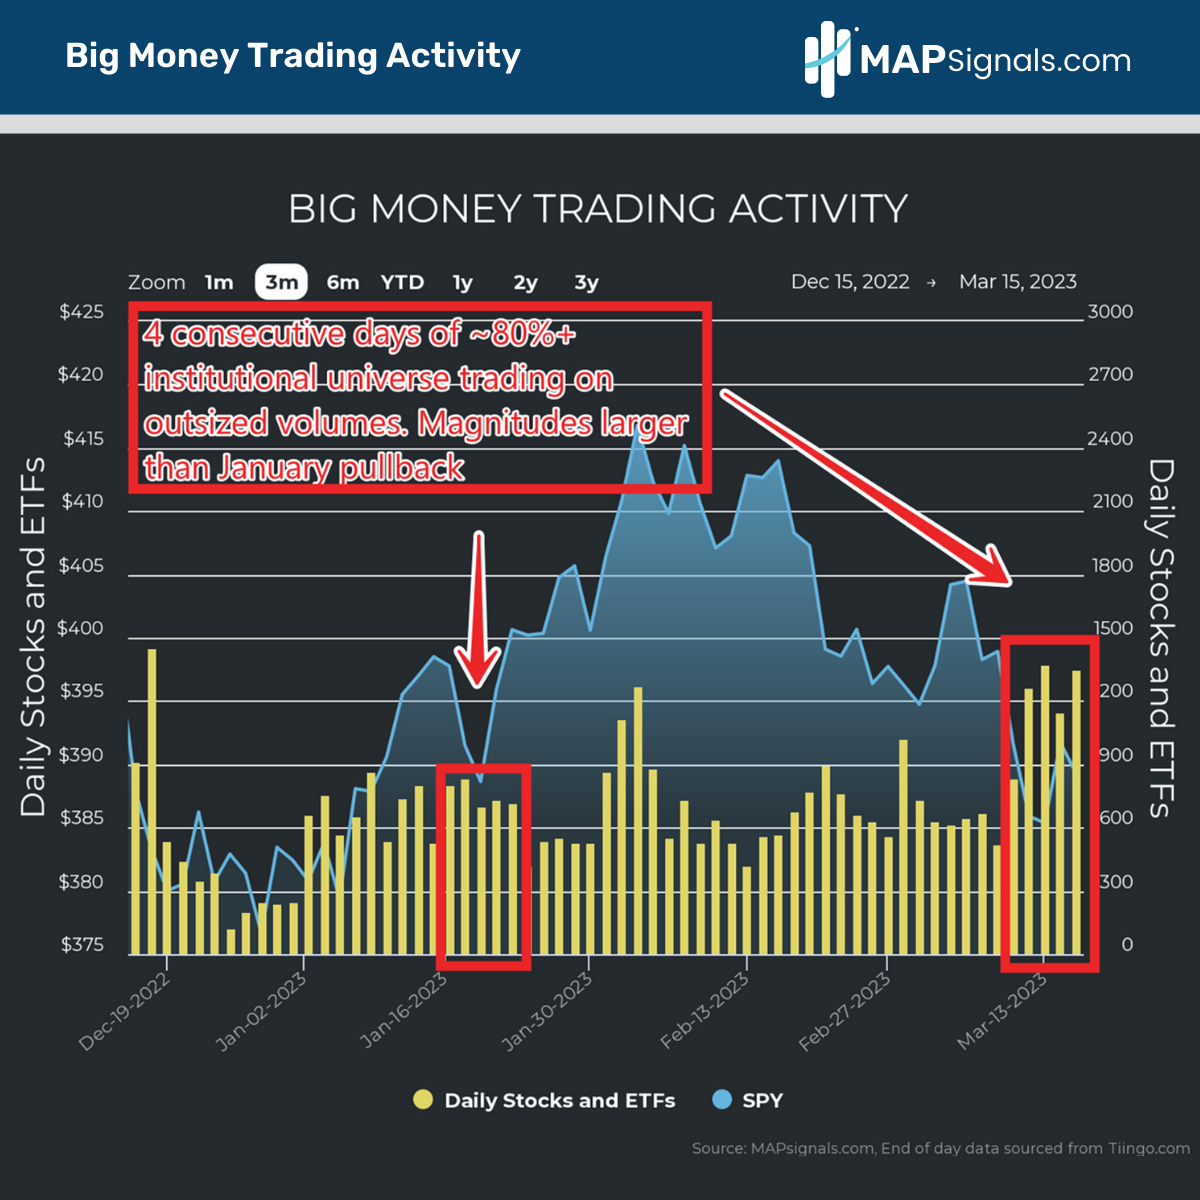 Large Institutional trading on outsized volumes | Big Money Trading Activity